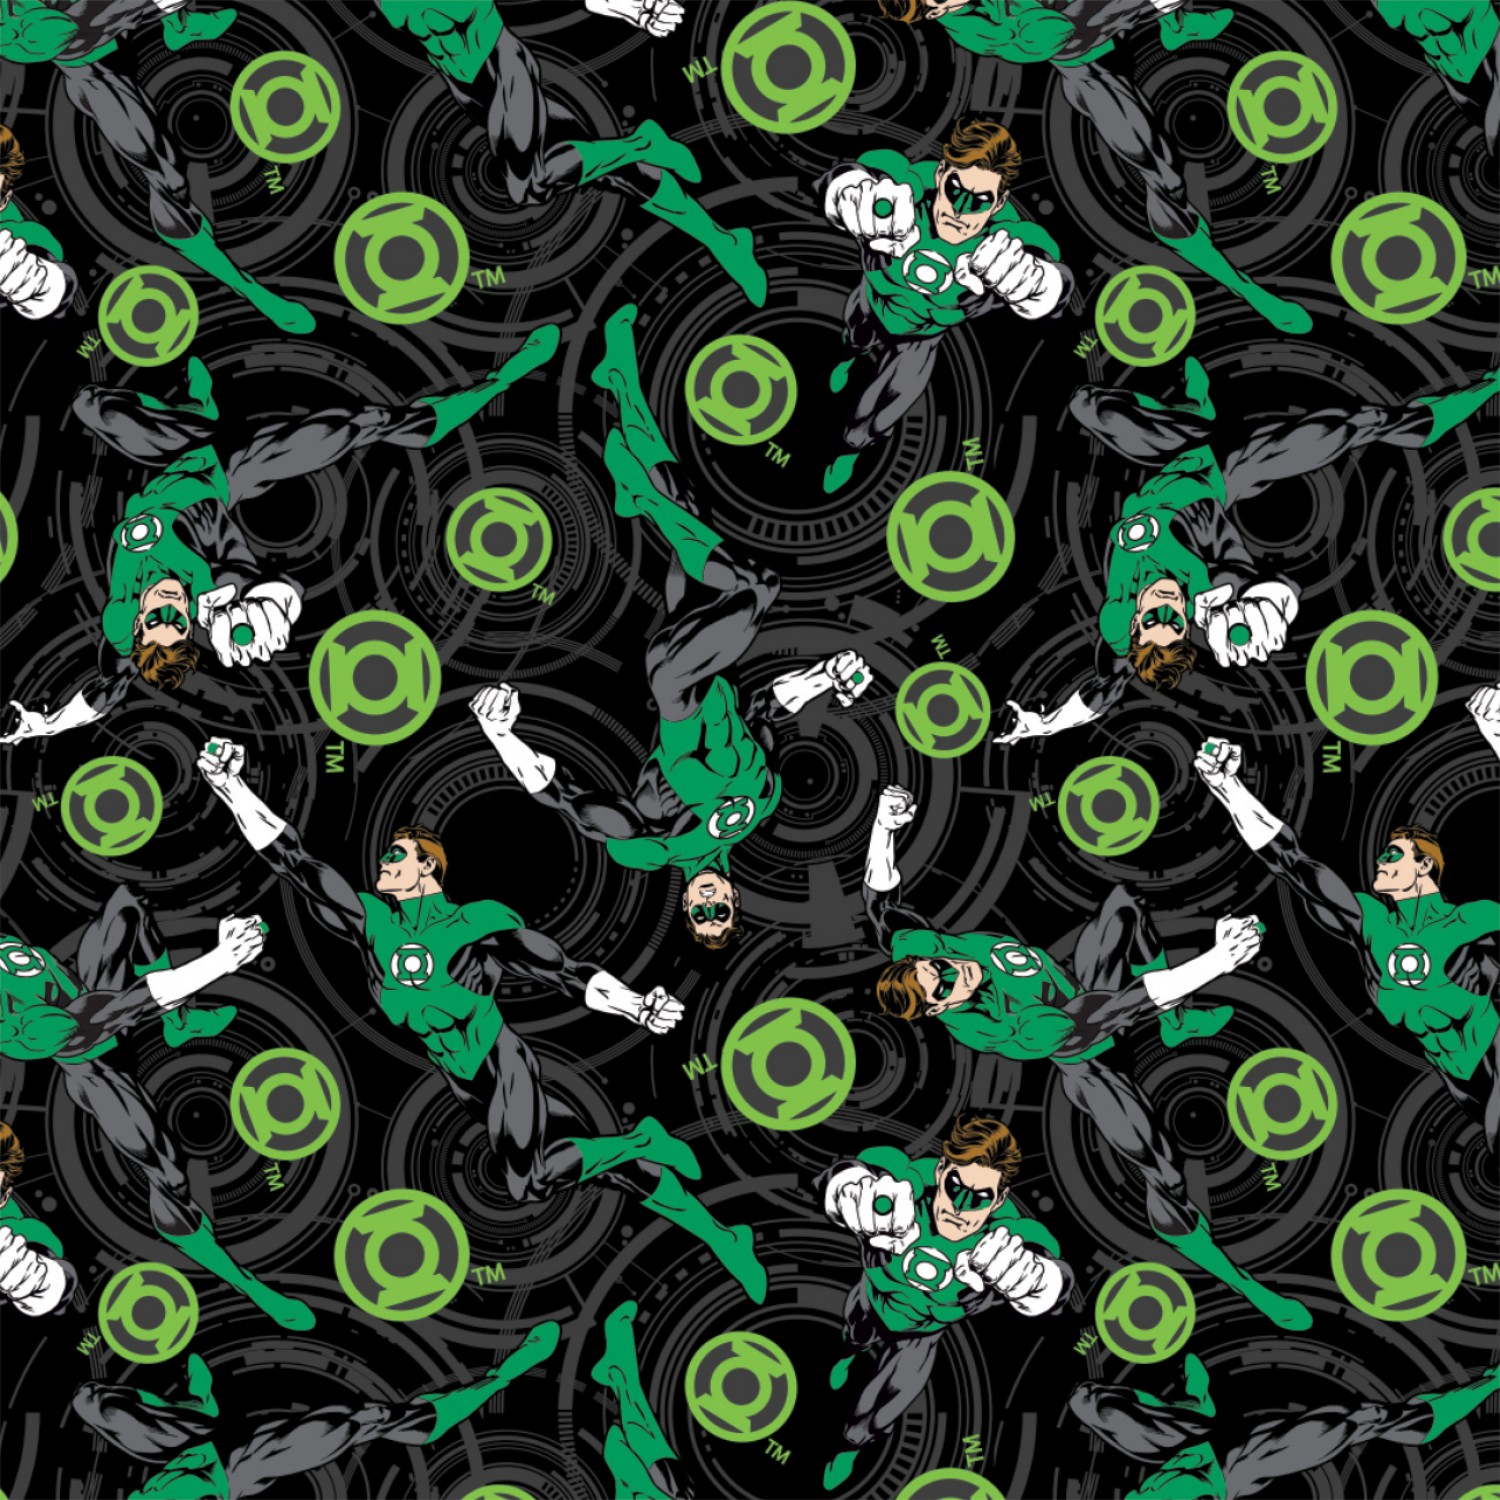 Dc Comics Green Lantern Core Energy Fabric - Black